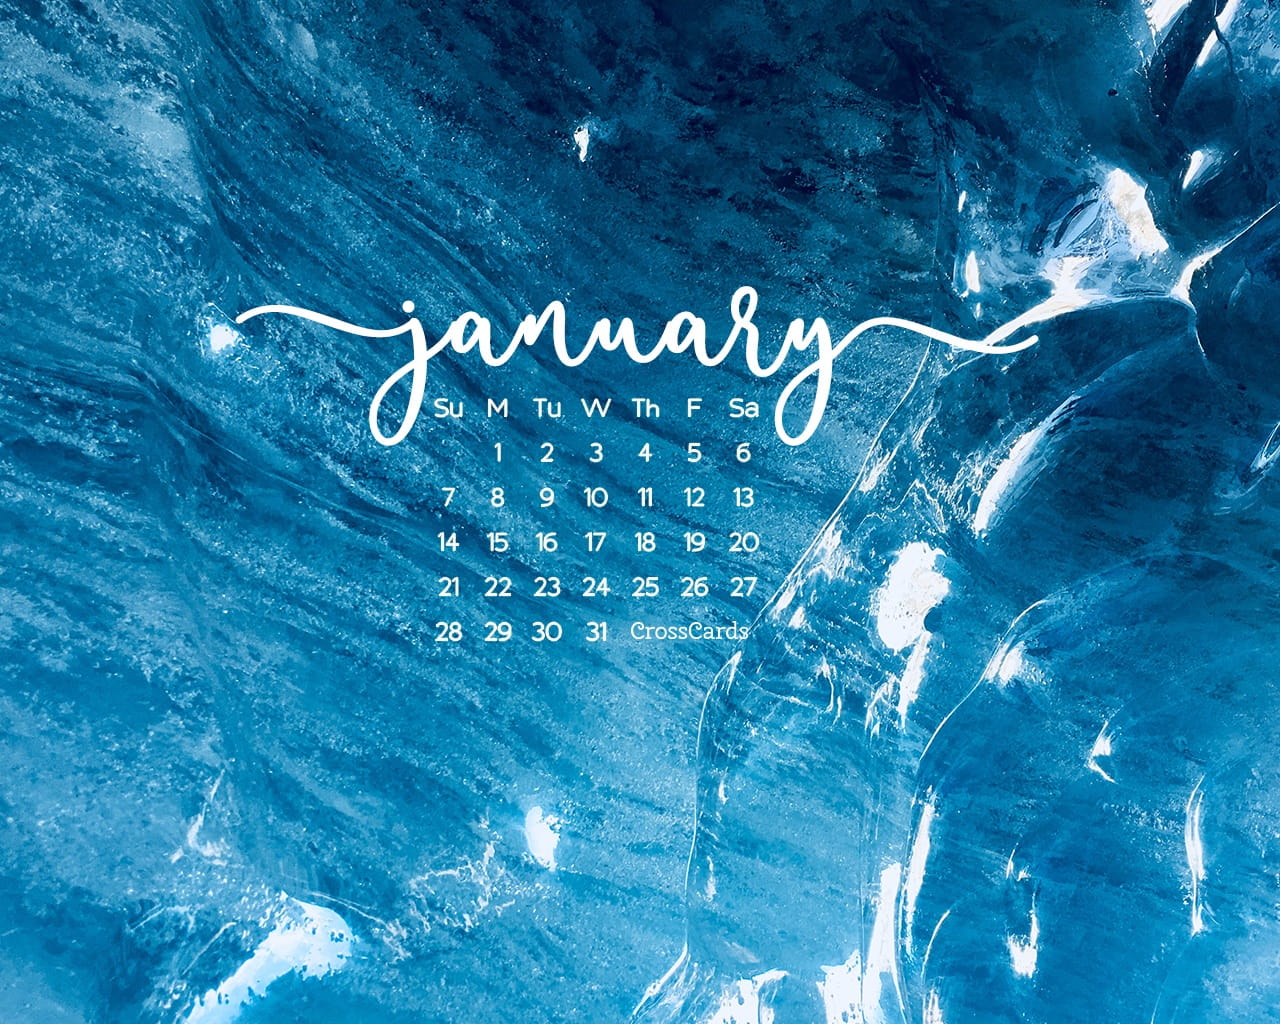 How to make an aesthetic desktop calendar  DIY  January 2021   YouTube